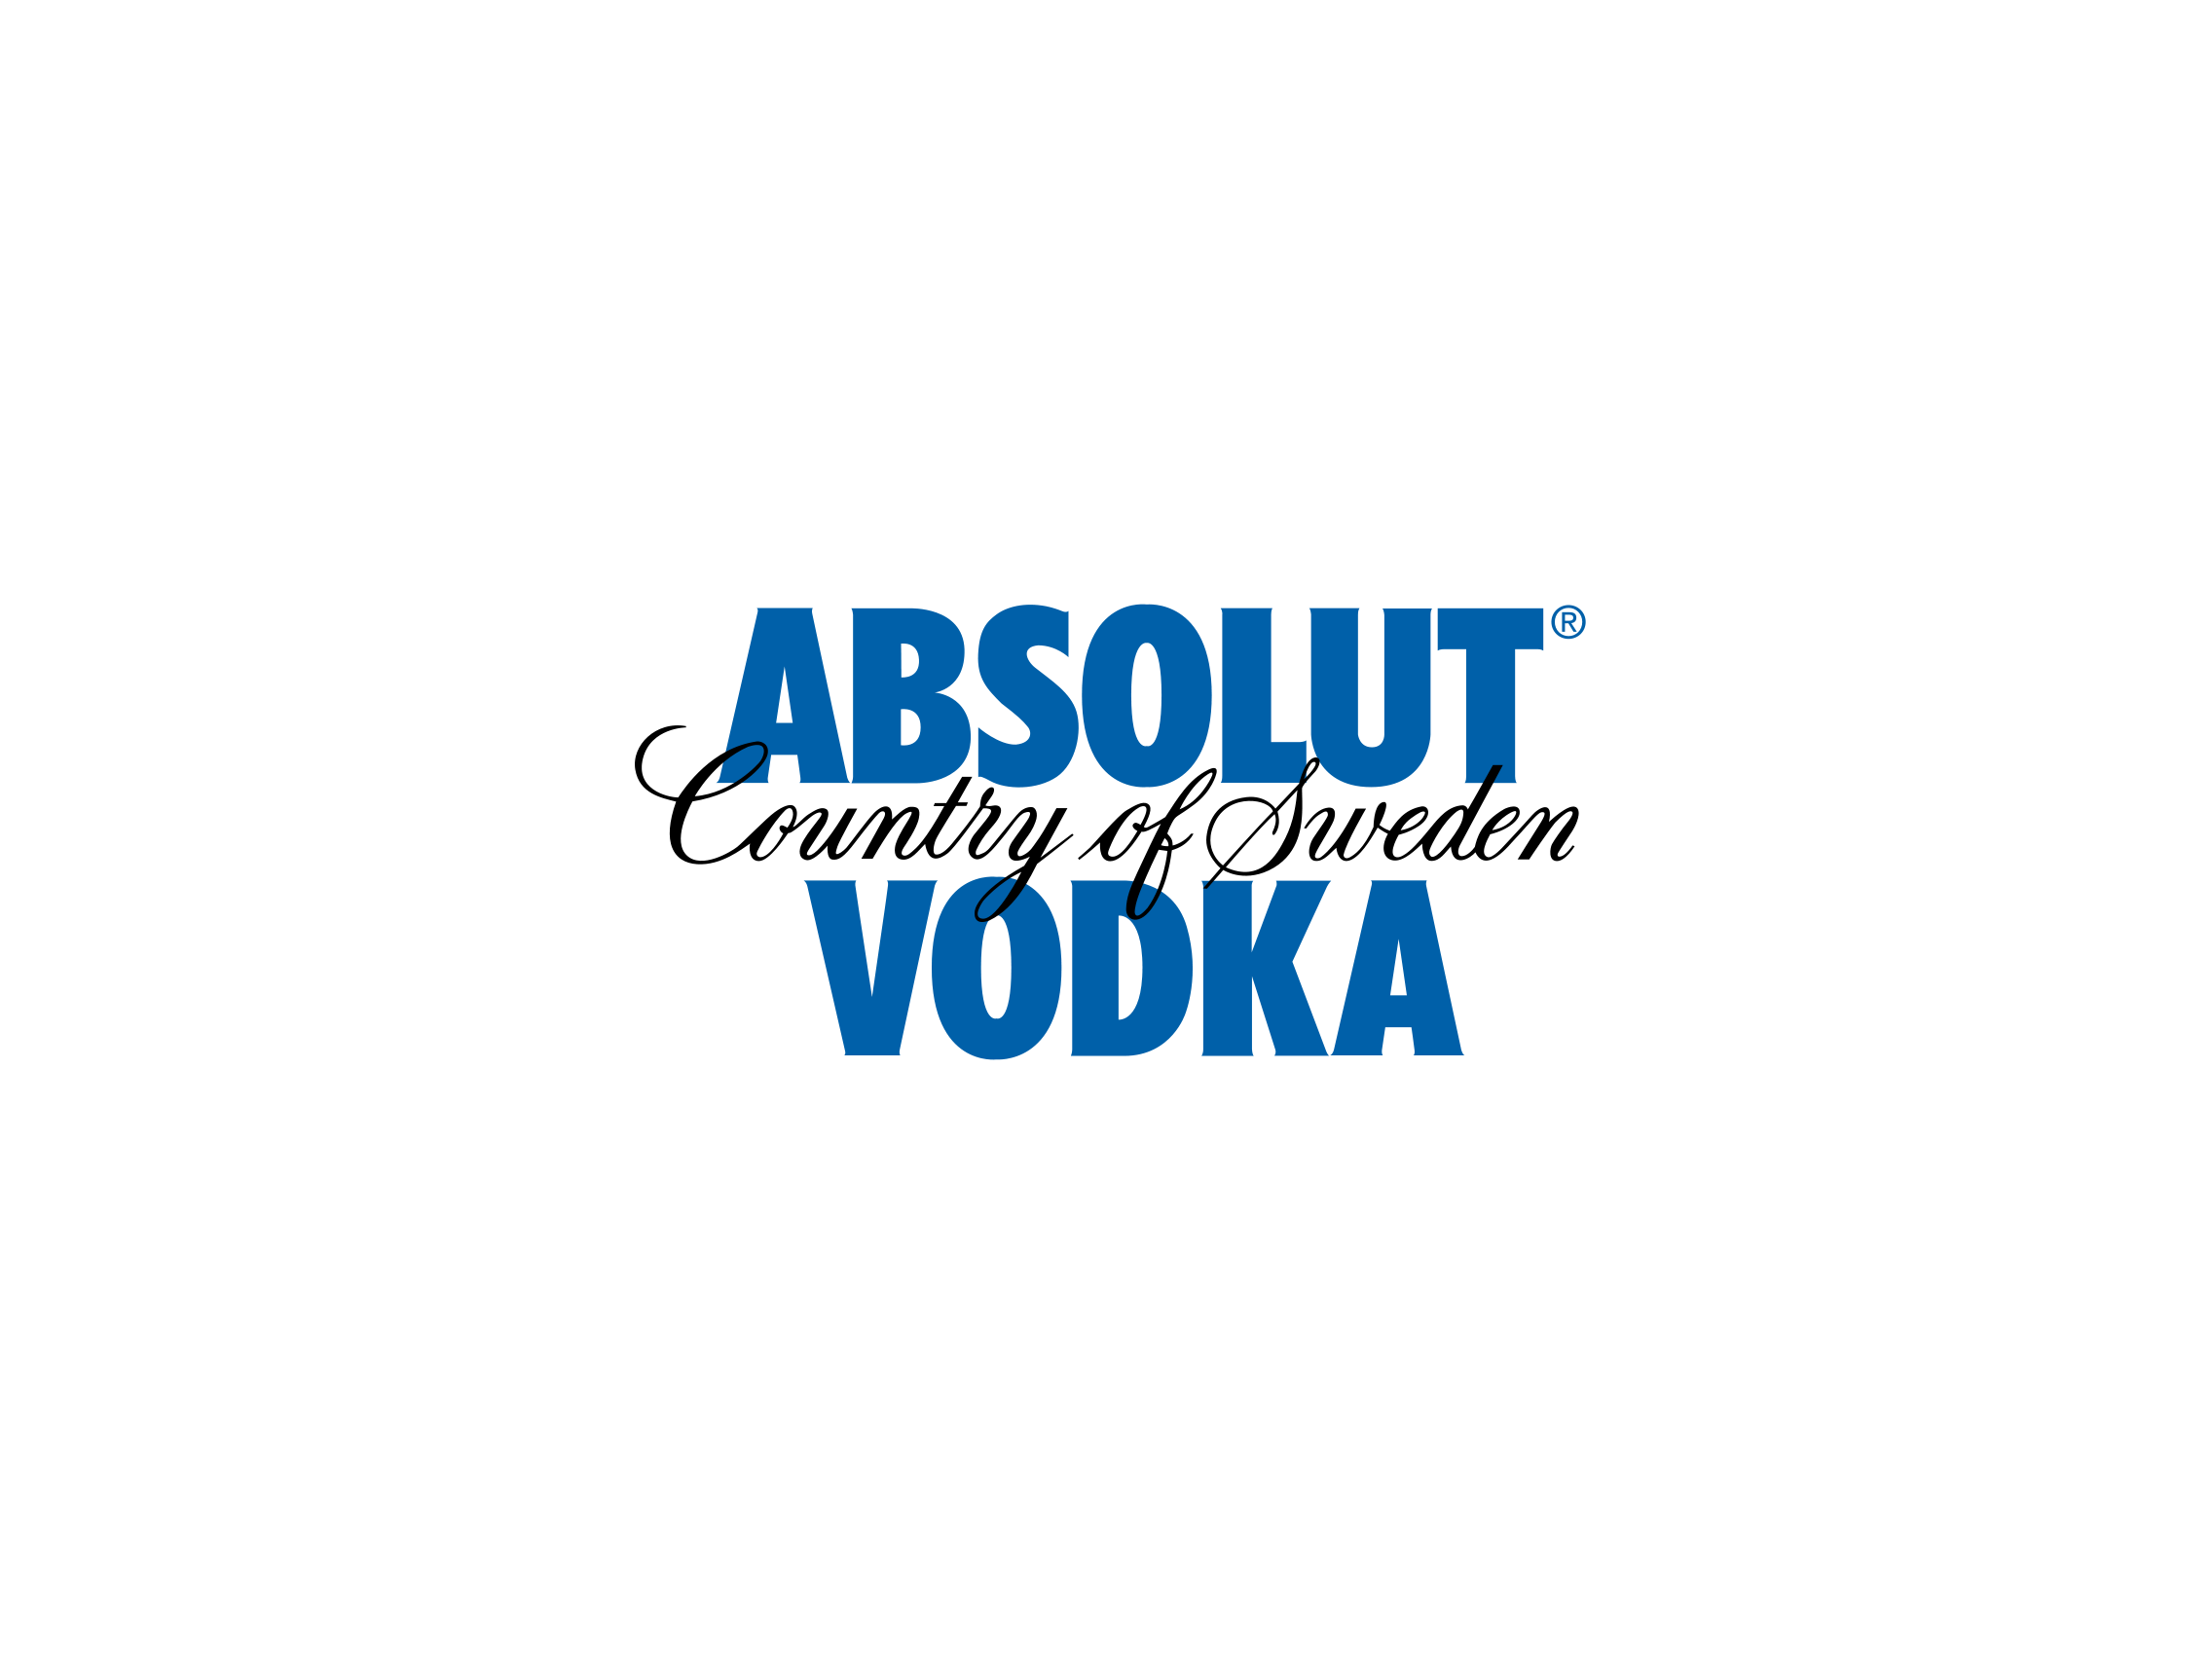 absolut vodka logo